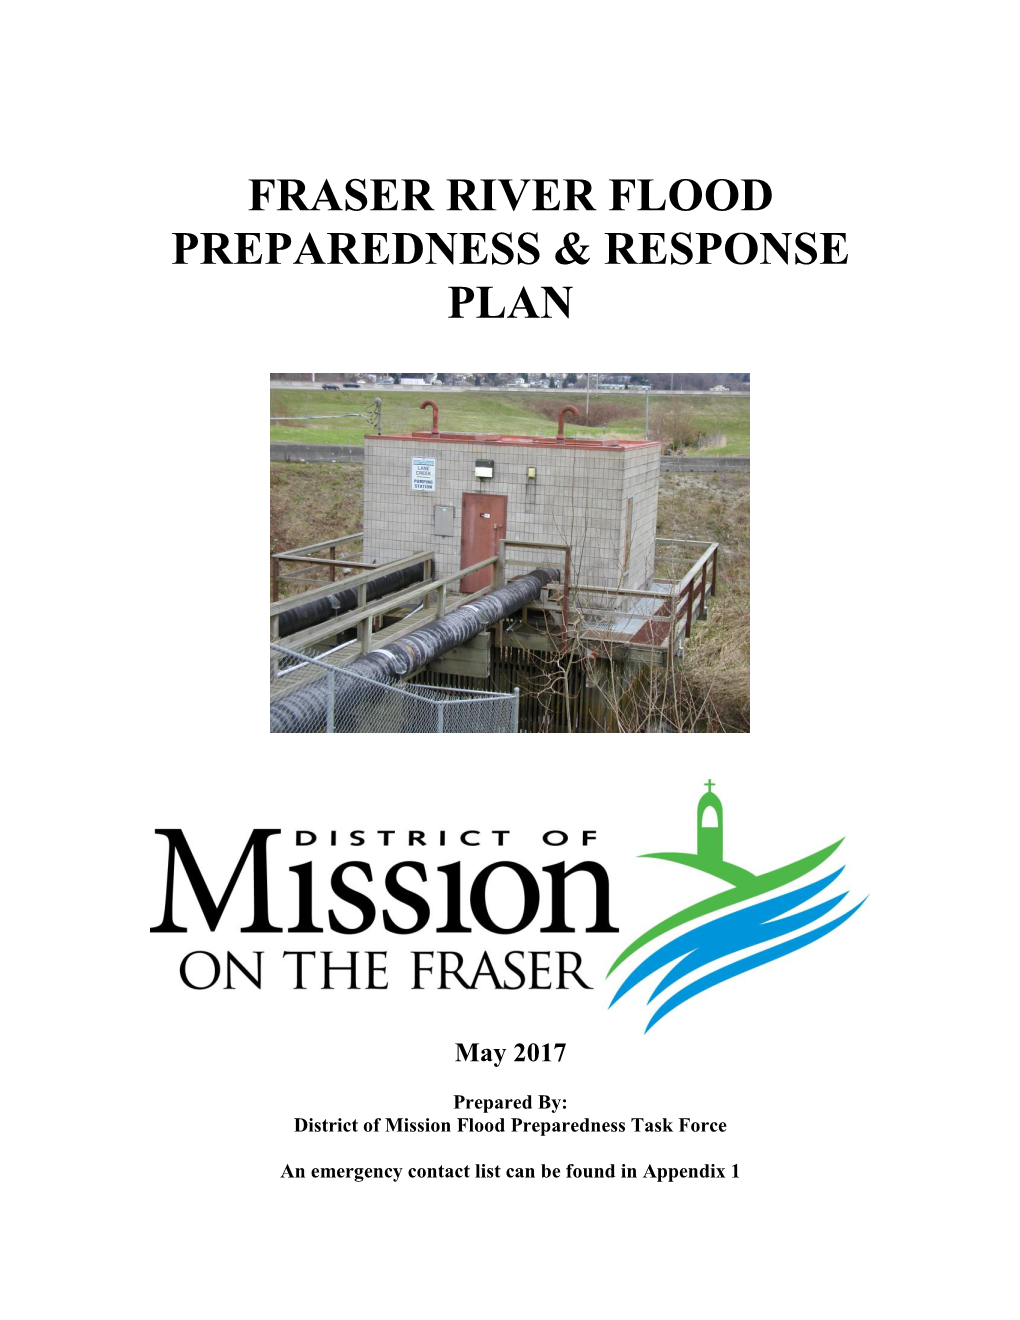 Fraser River Flood Preparedness and Response Plan May 2017